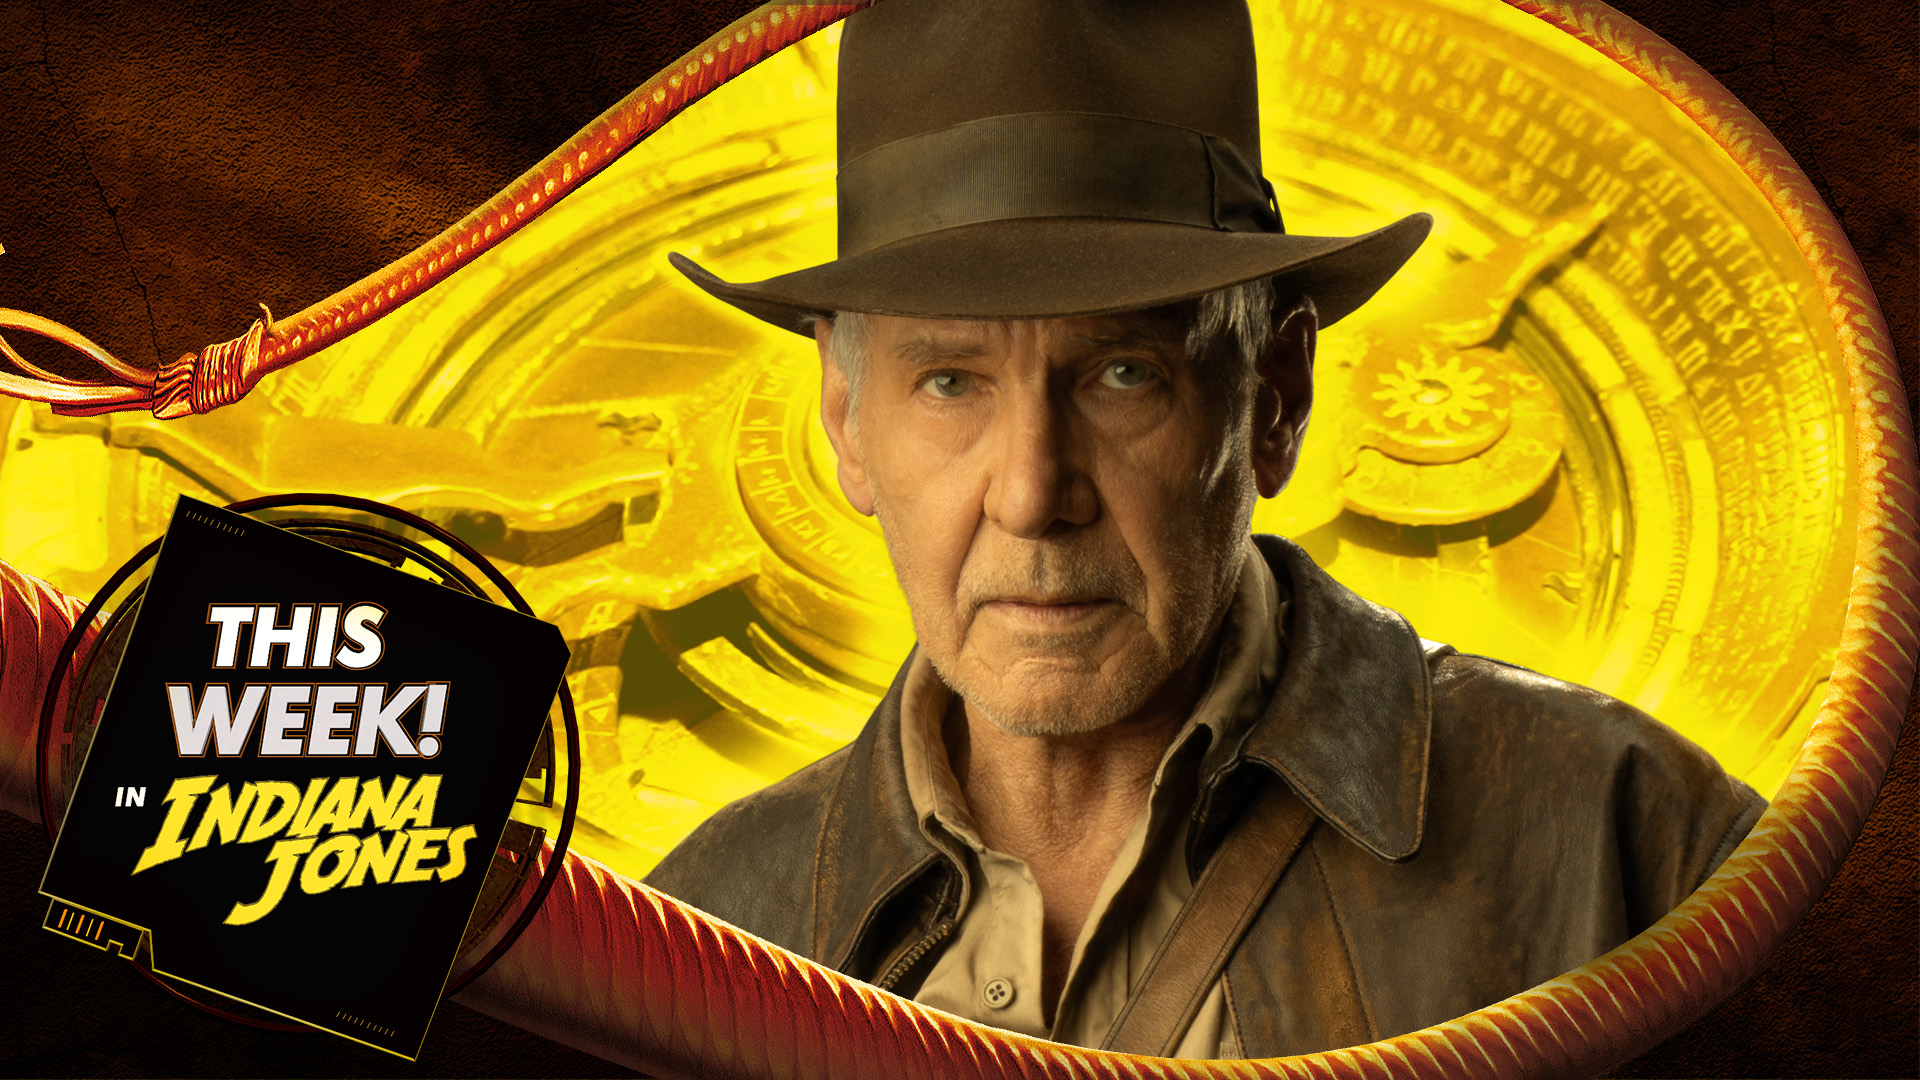 This week in Indiana Jones thumbnail